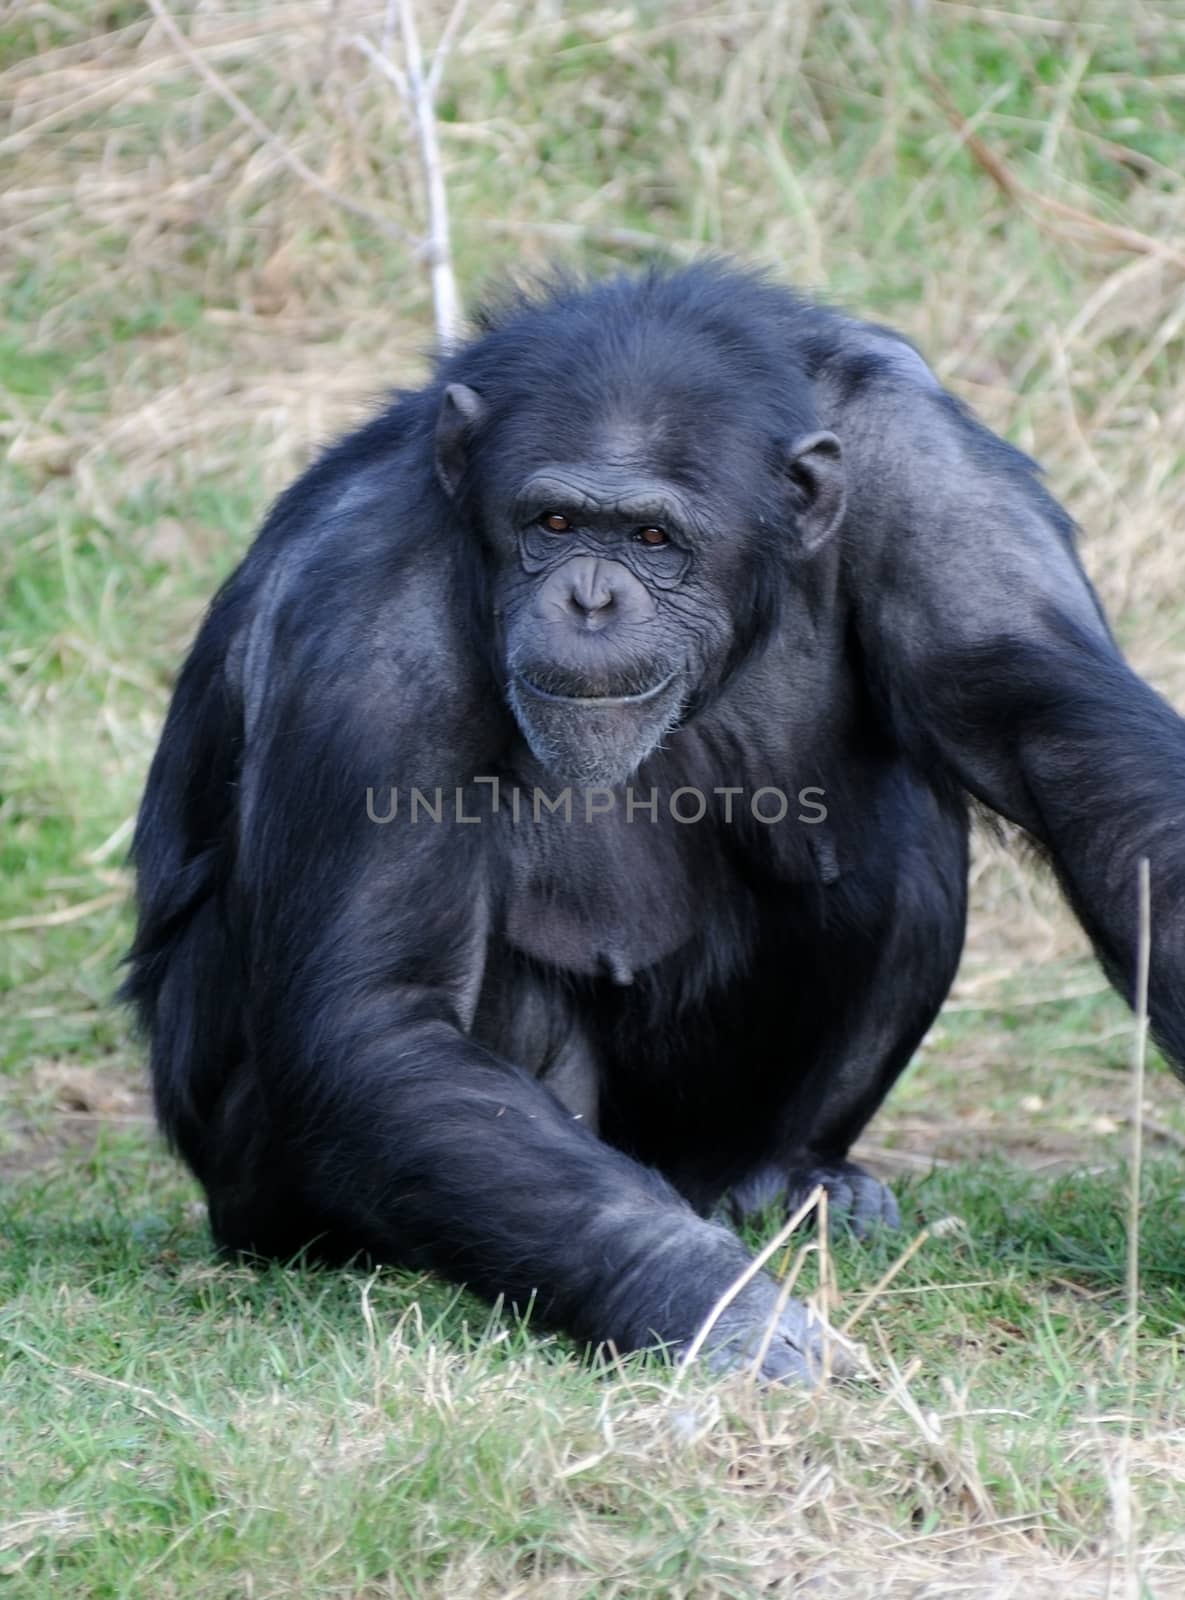 Chimpanzee alert by kmwphotography